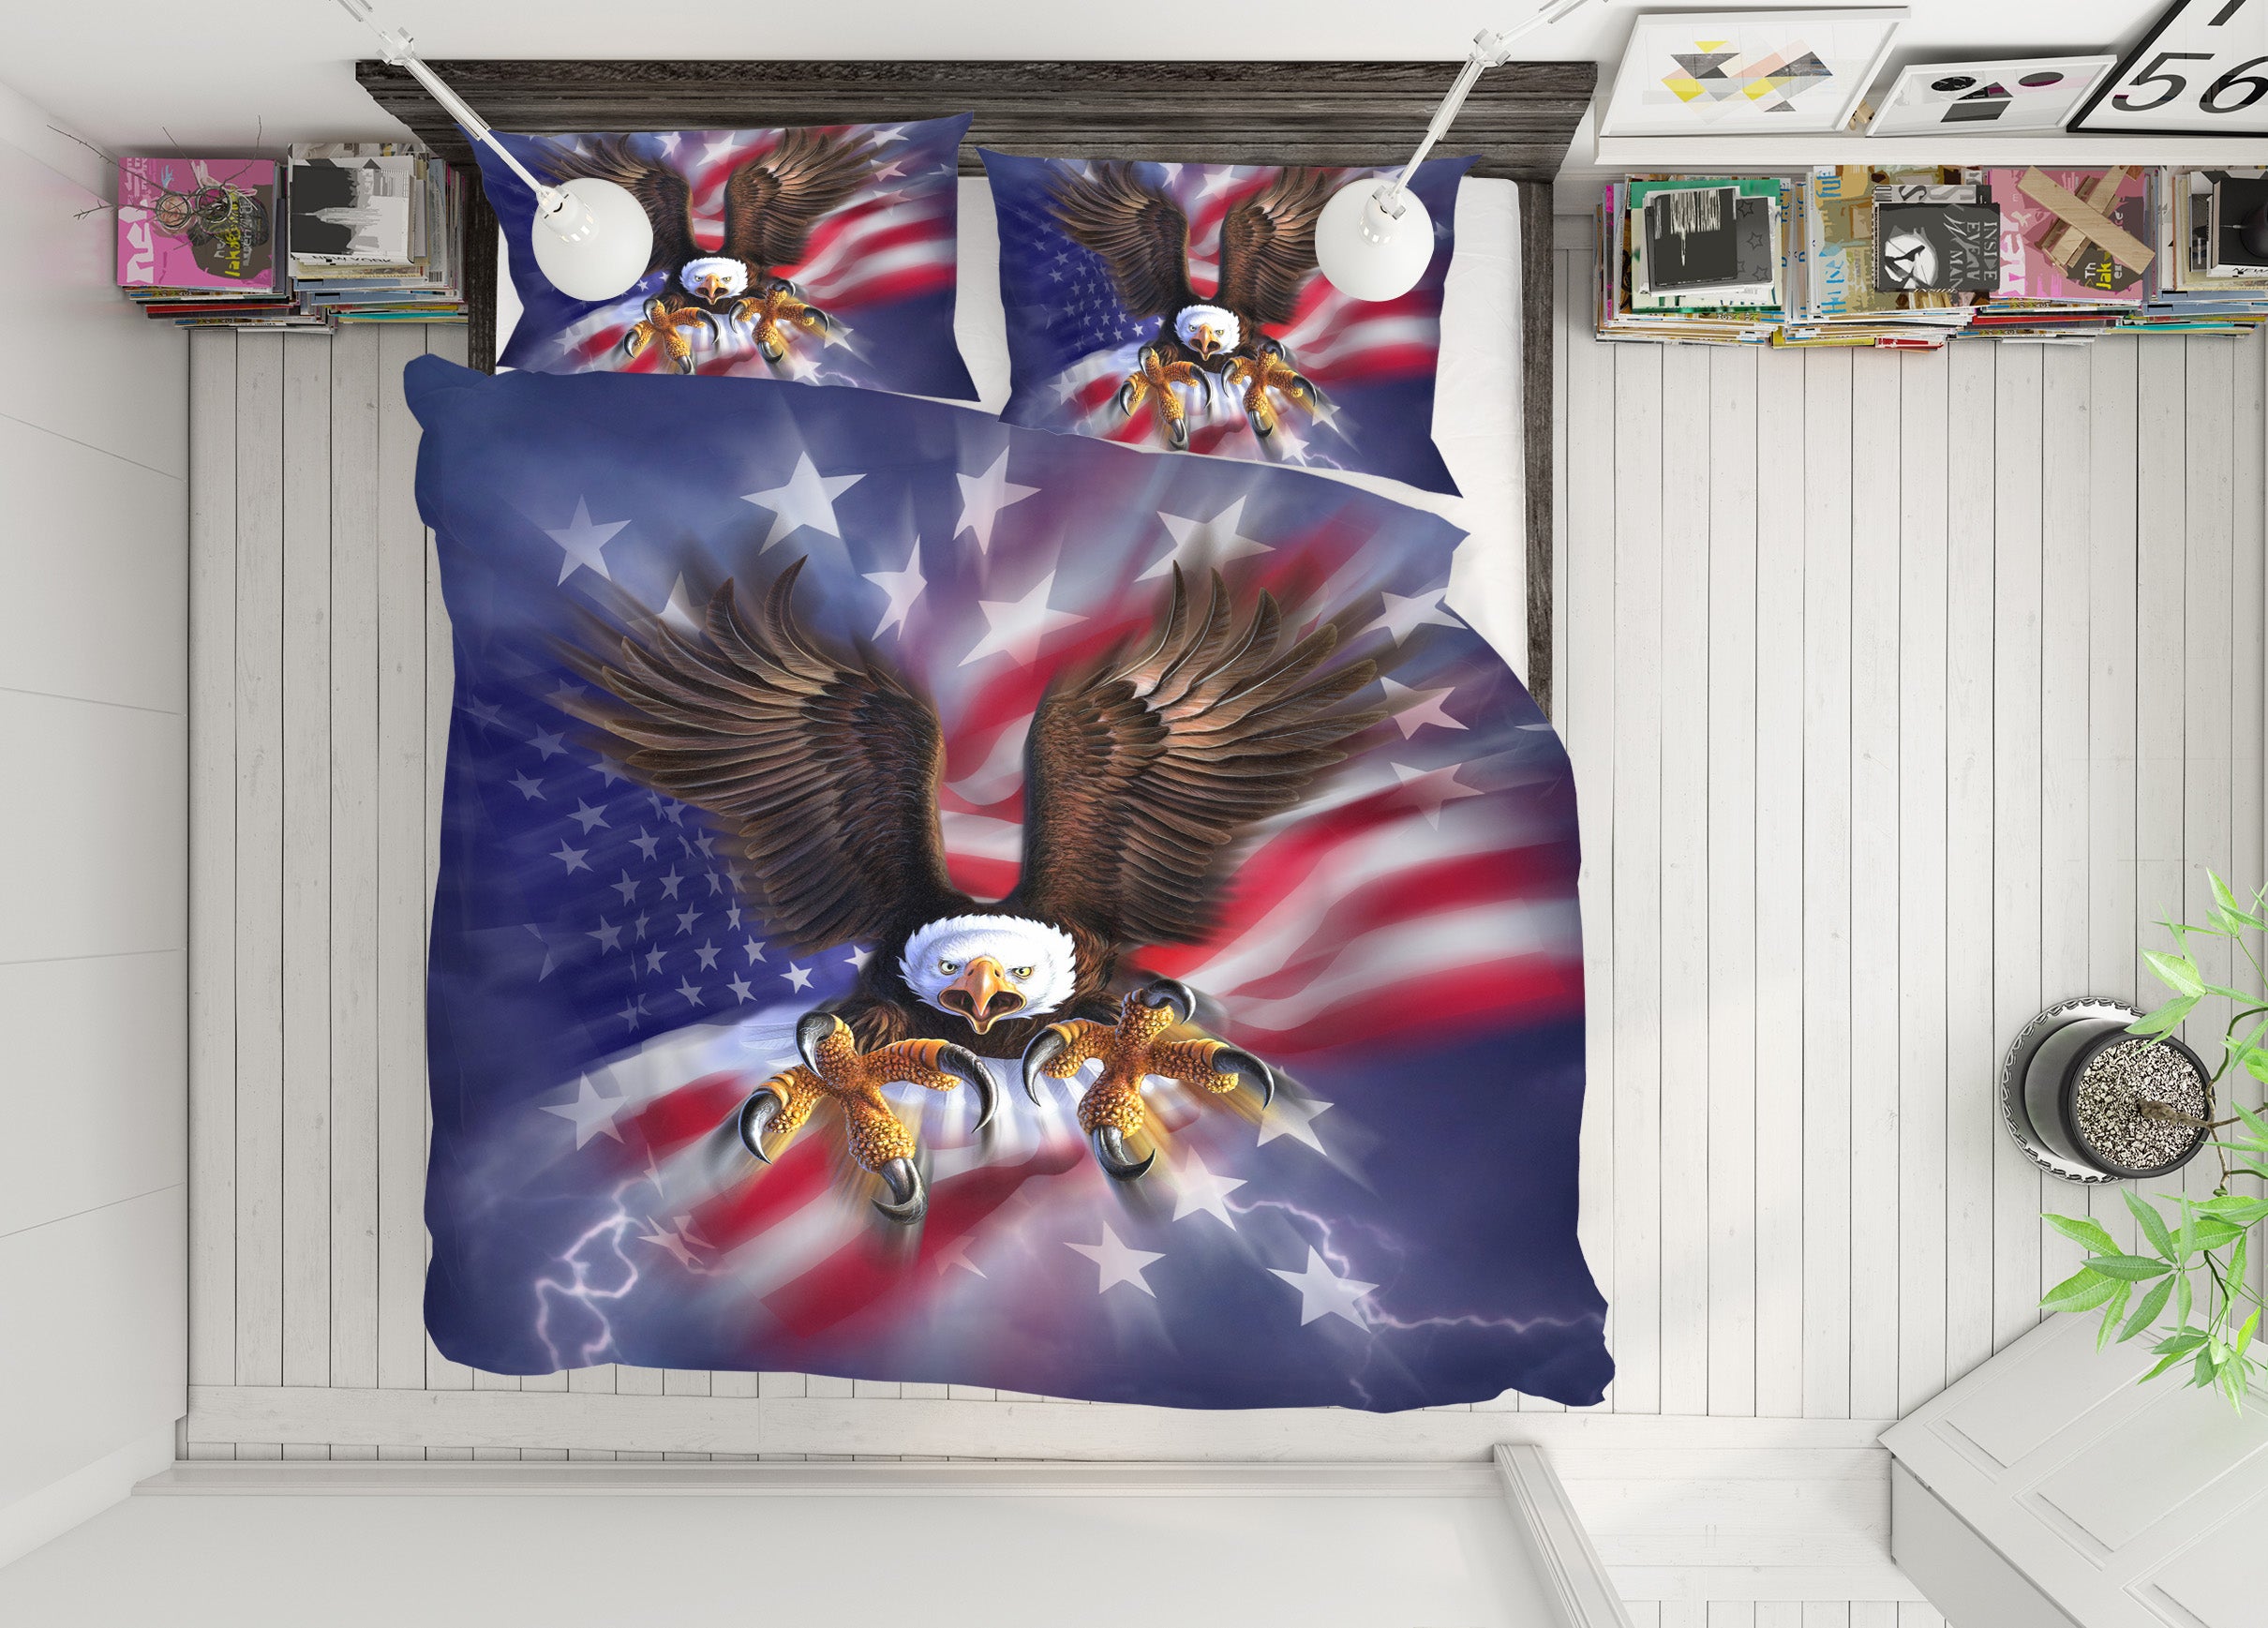 3D Patriotic Eagle 86009 Jerry LoFaro bedding Bed Pillowcases Quilt